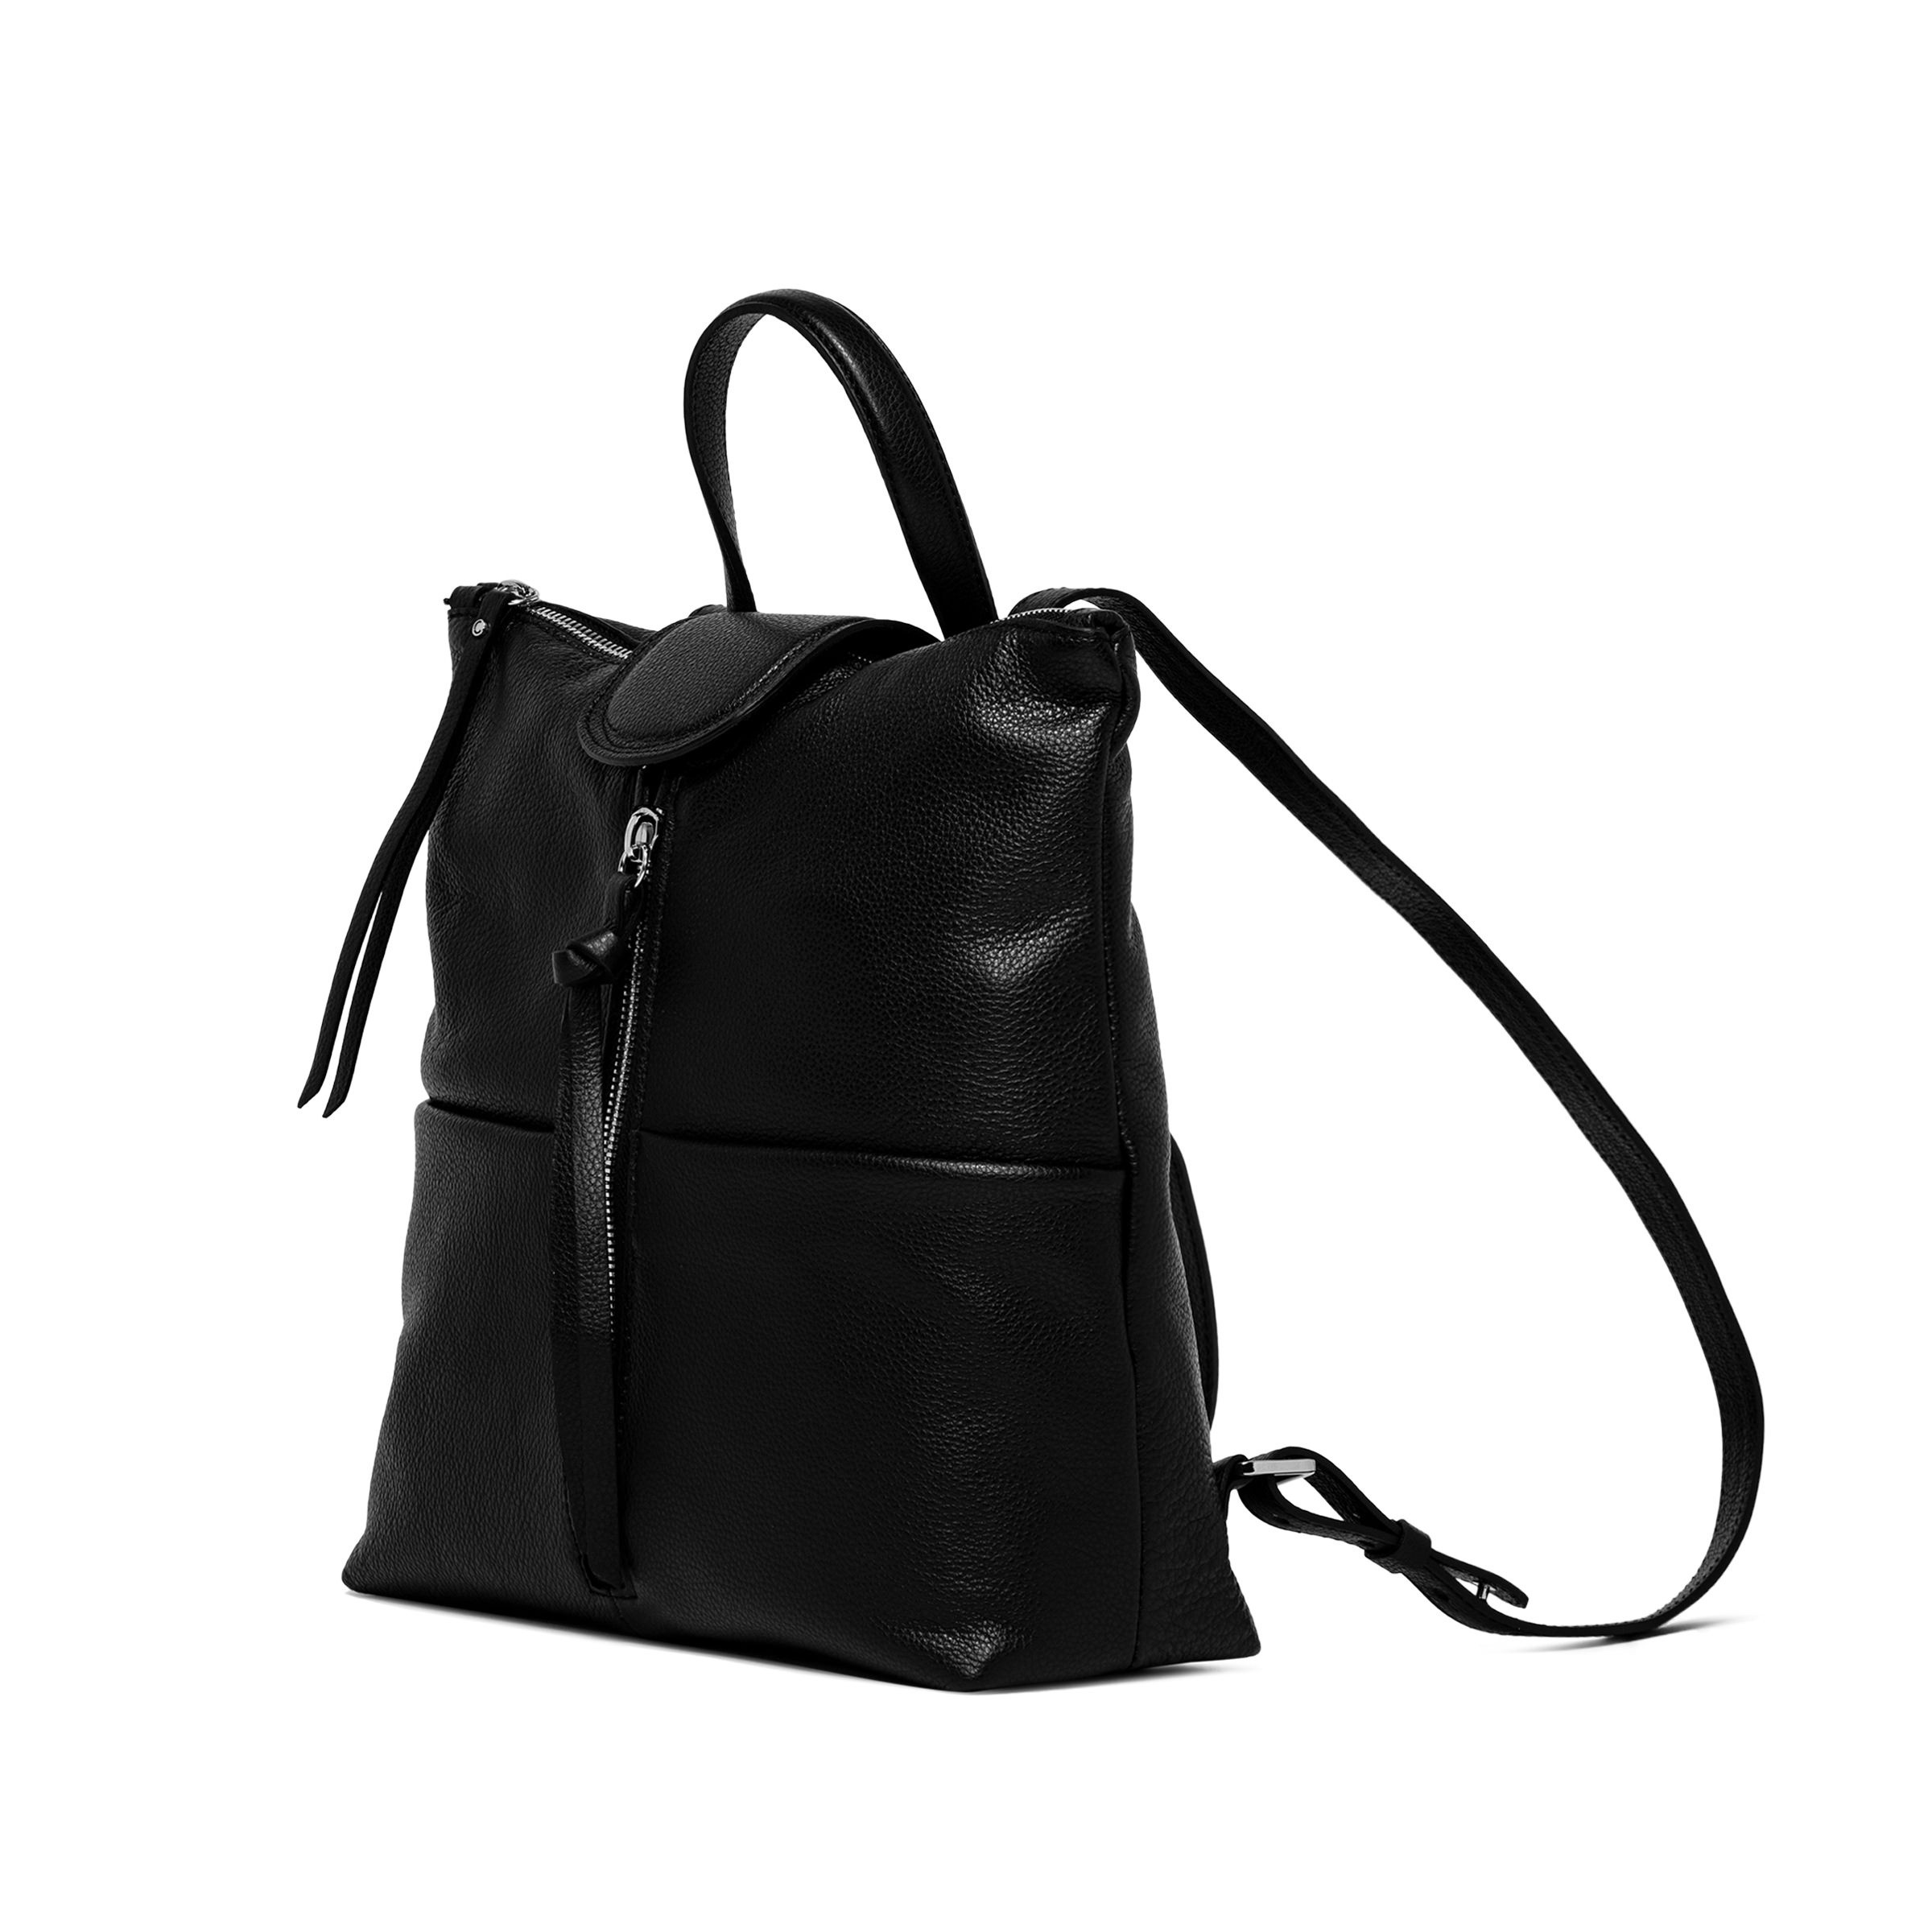 Gianni Chiarini - Jade leather backpack, Black, large image number 2